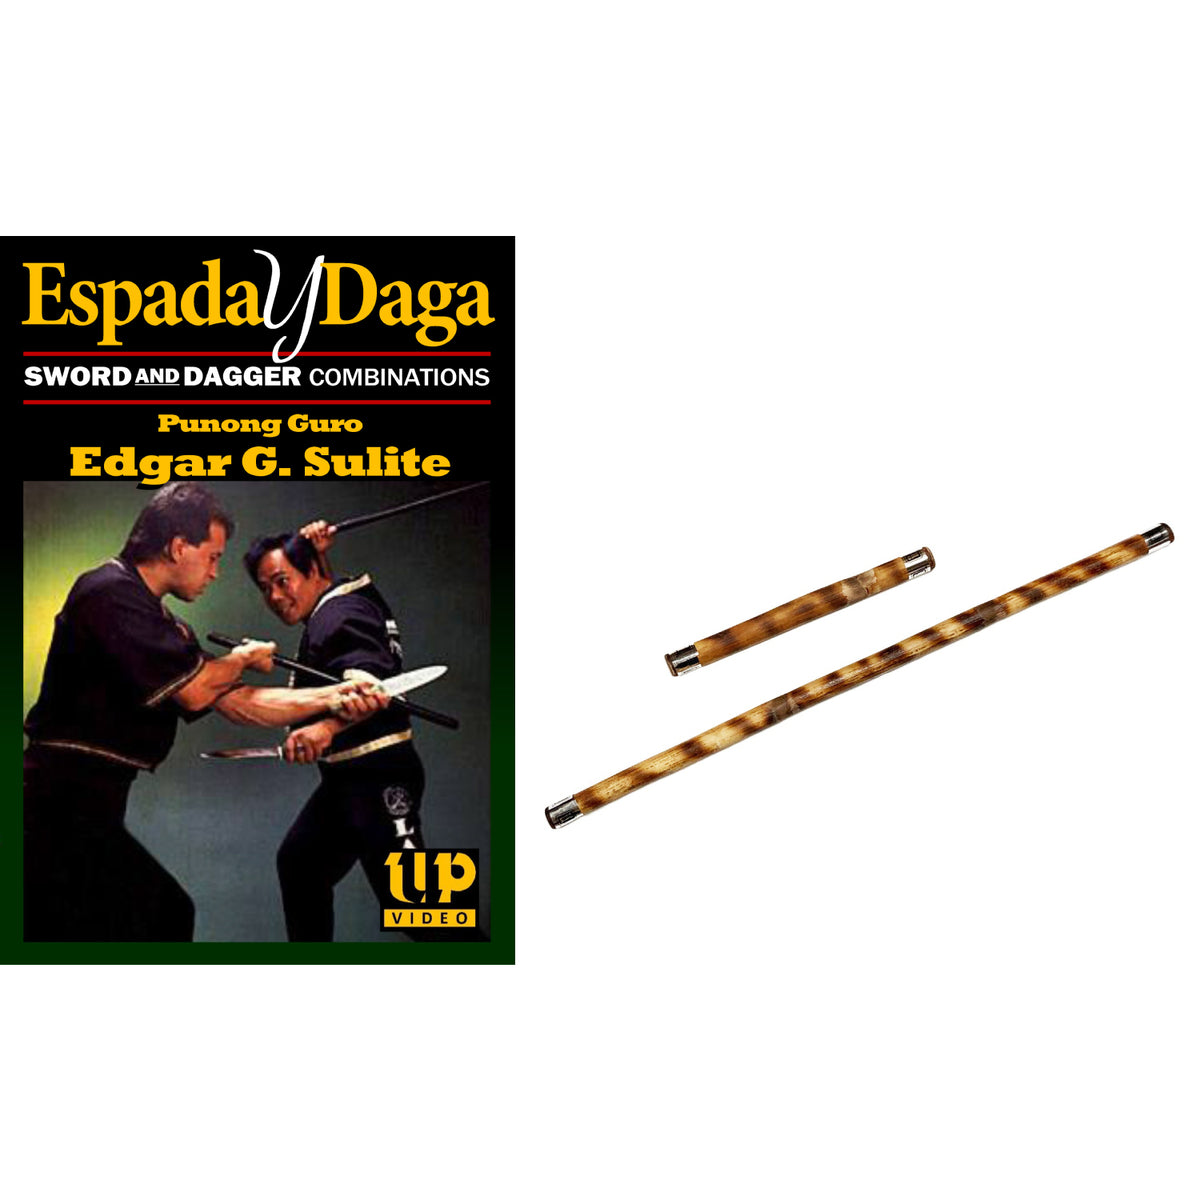 USA FMA Espada y Daga Rattan Stick + VIDEO Set - Learn From a Master!